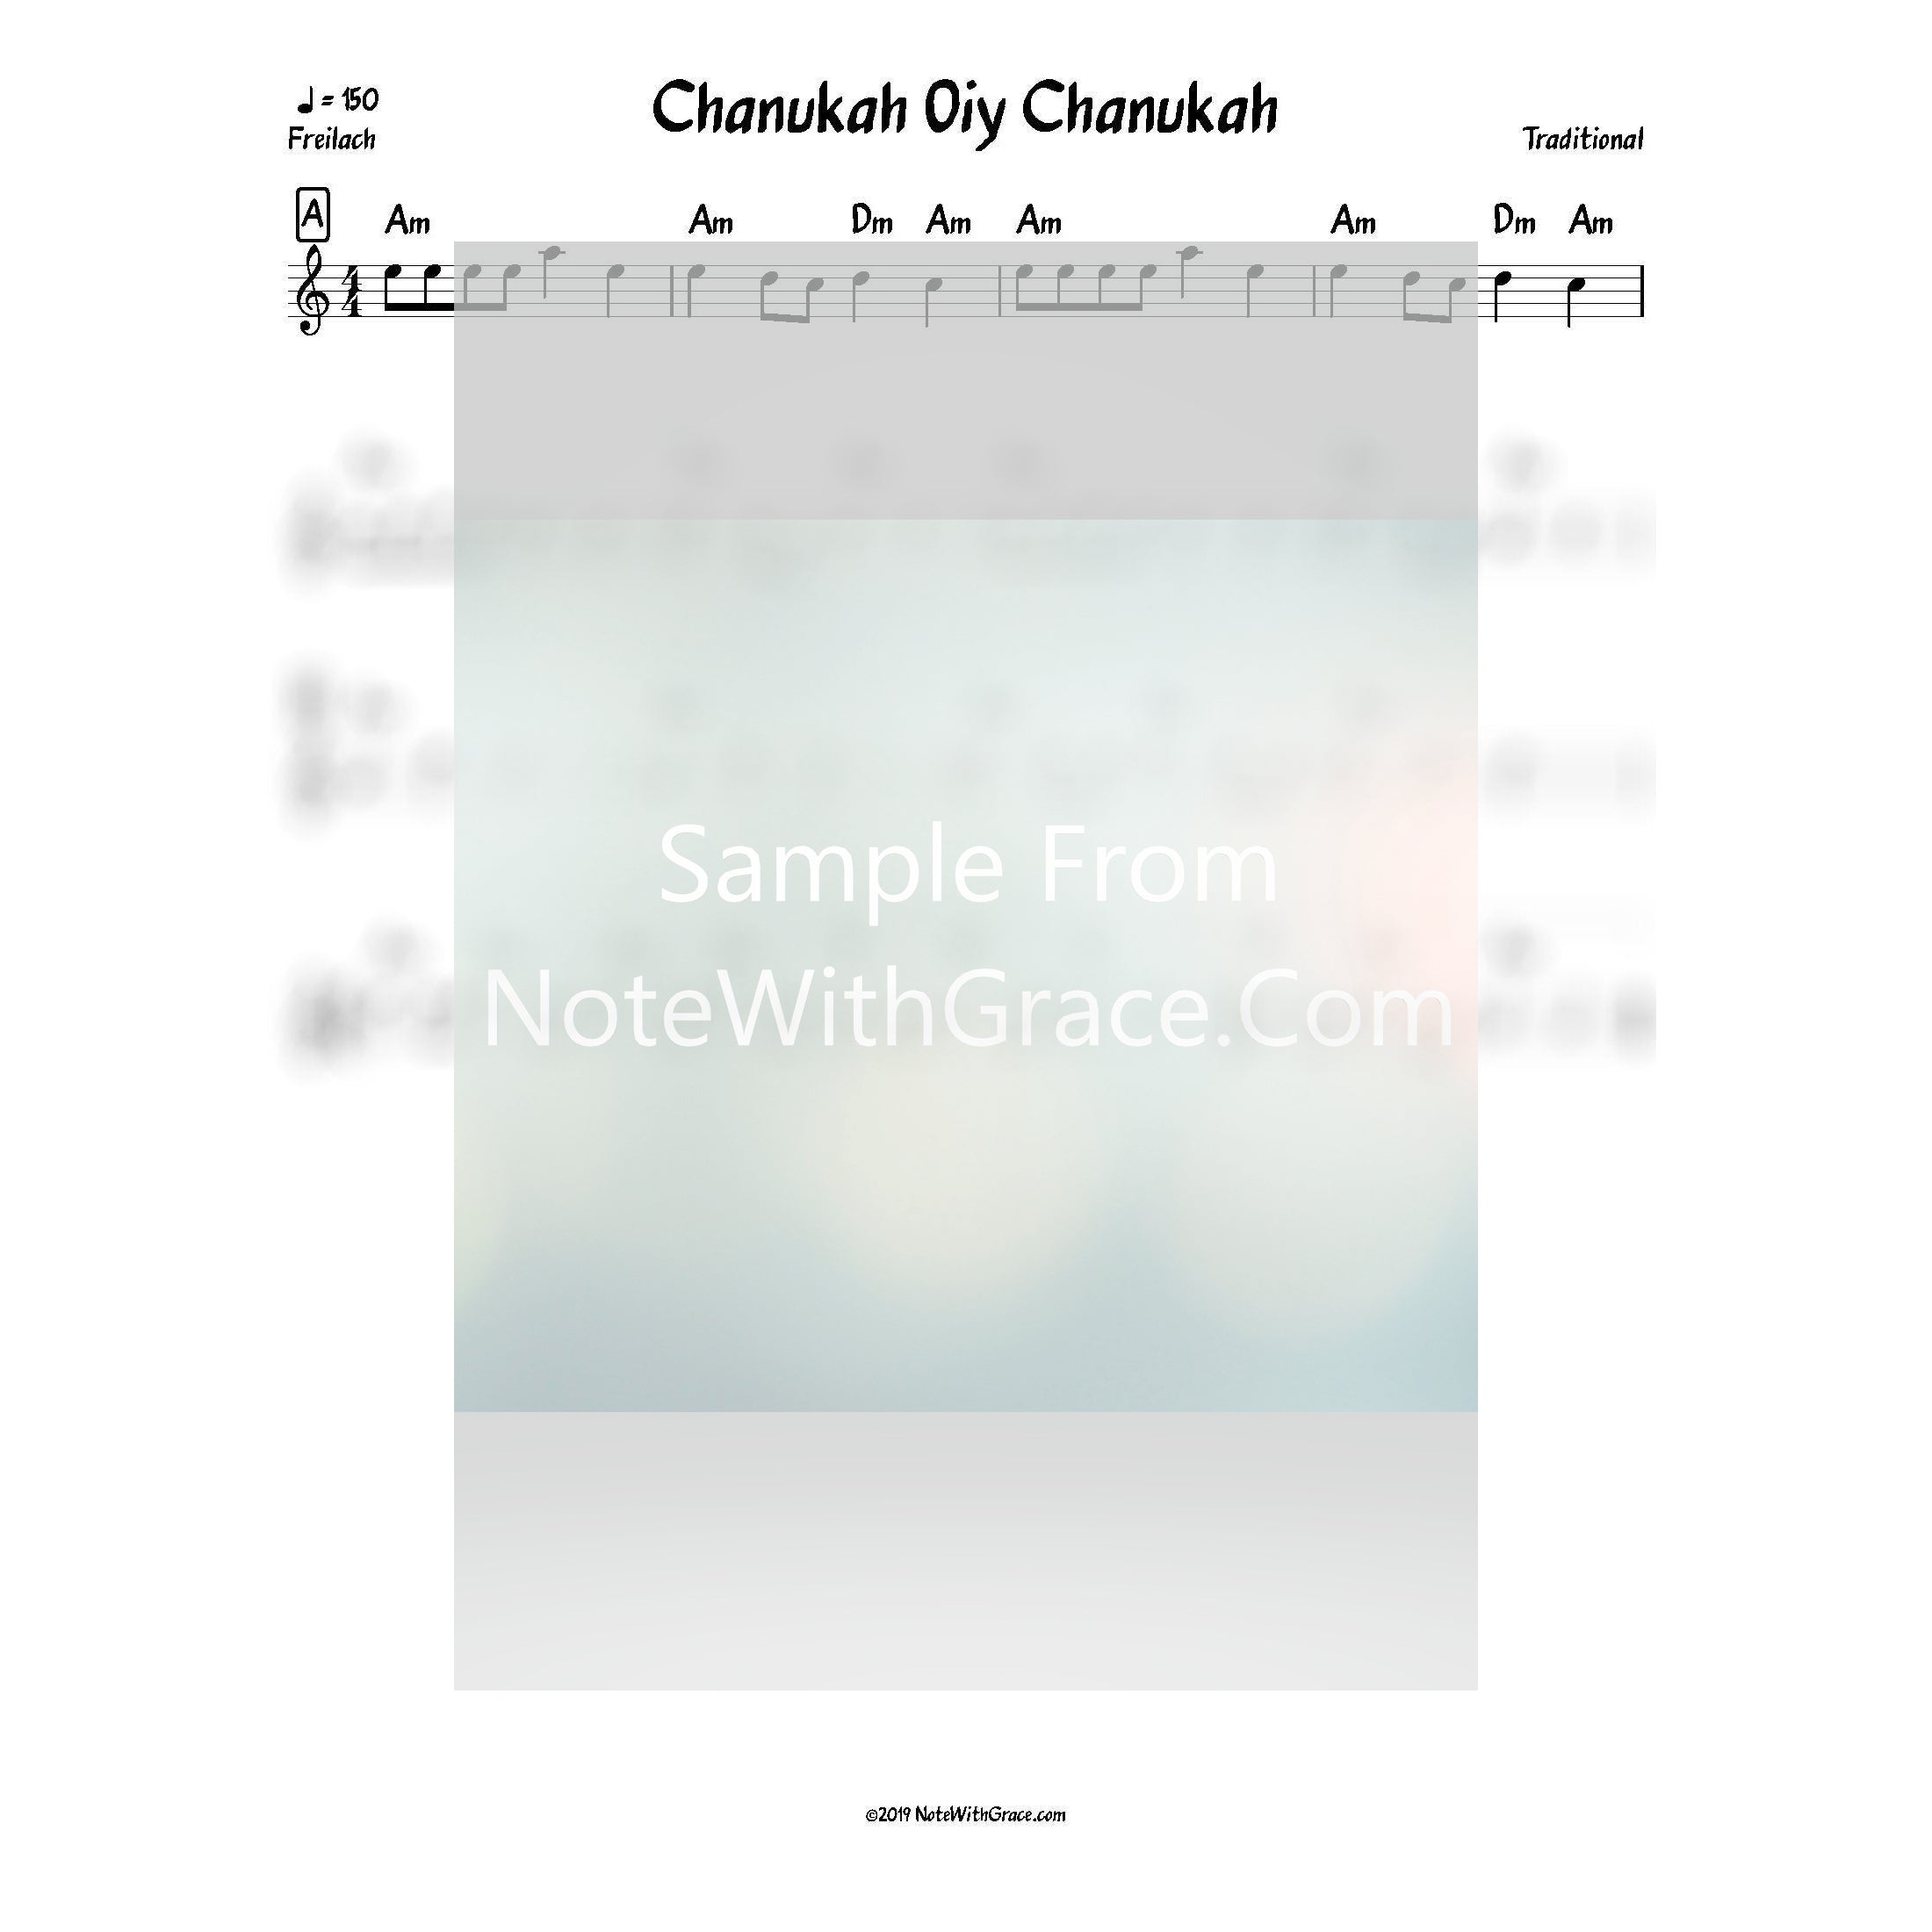 Chanukah Oiy Chanukah Lead Sheet (Traditional Chanukah)-Sheet music-NoteWithGrace.com